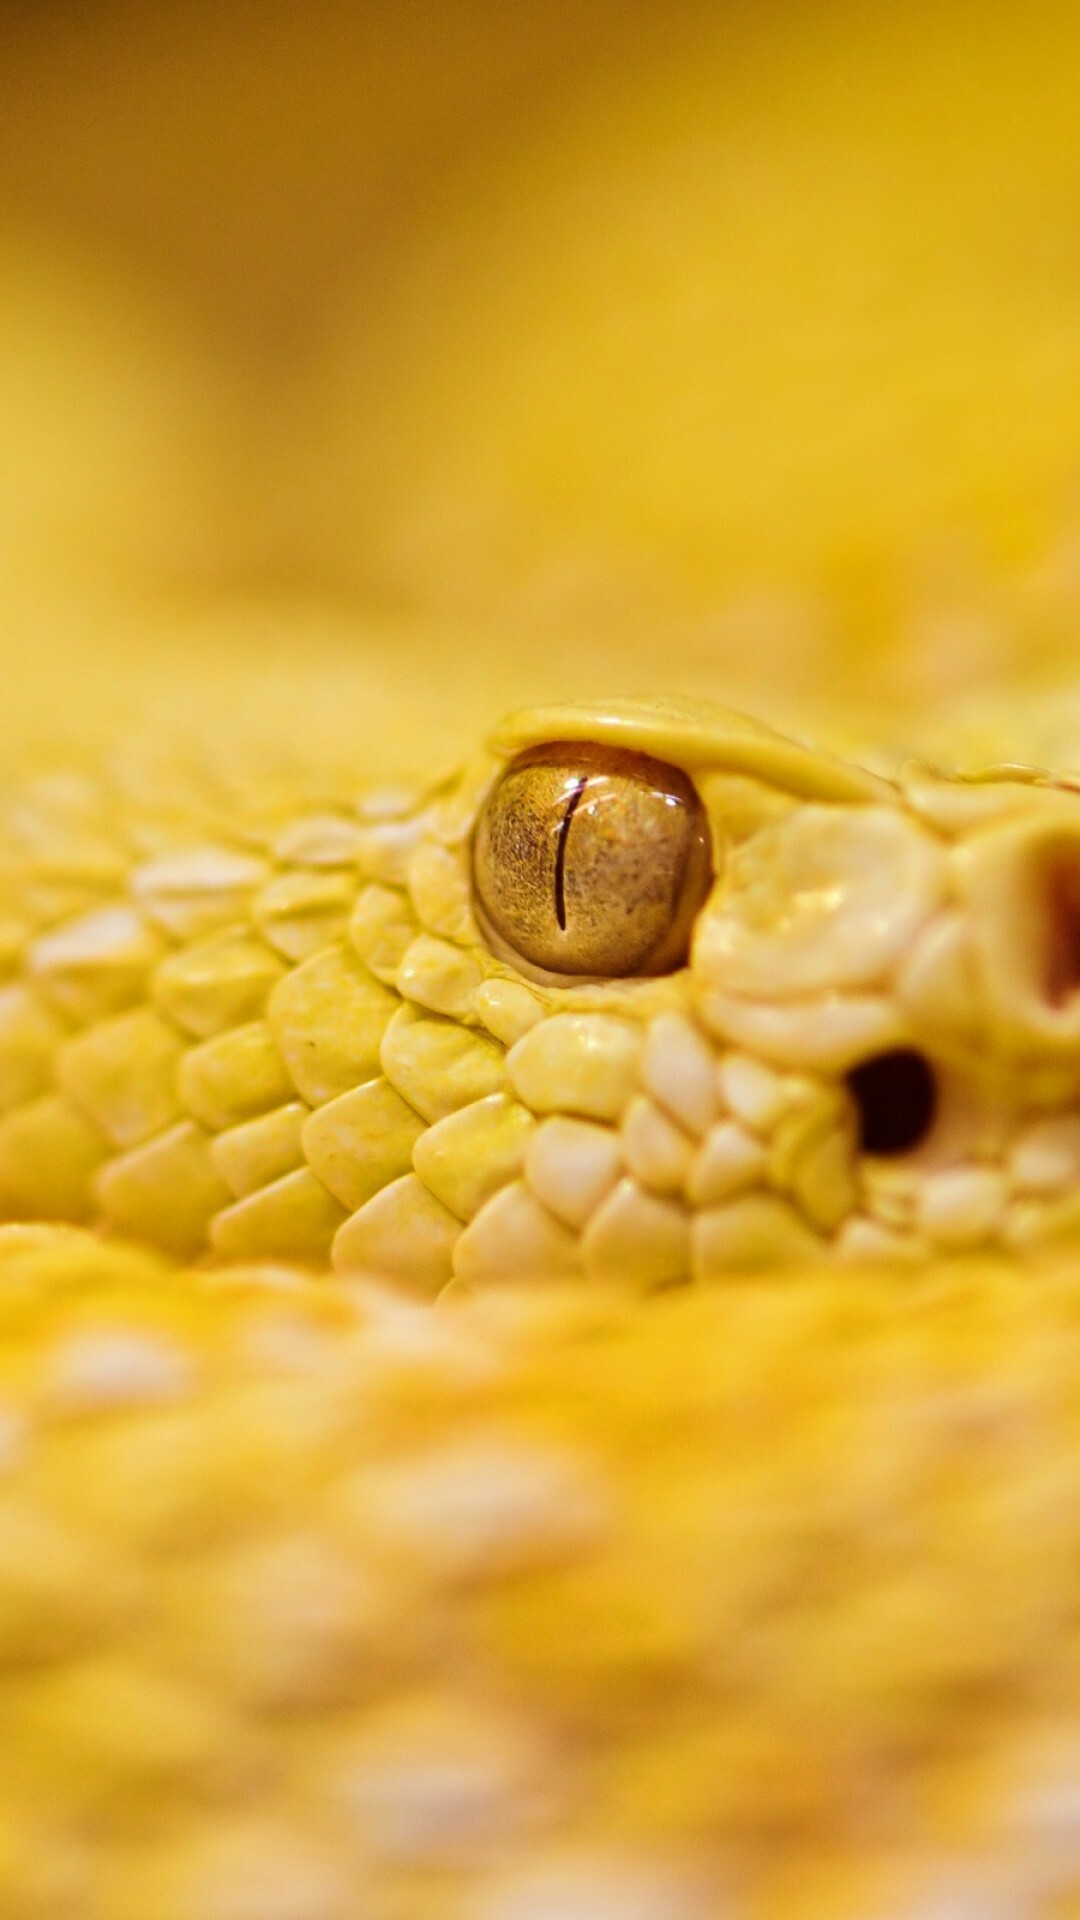 Snake: Albino, Rattlesnake, Yellow reptile, Predator, Serpent. 1080x1920 Full HD Wallpaper.